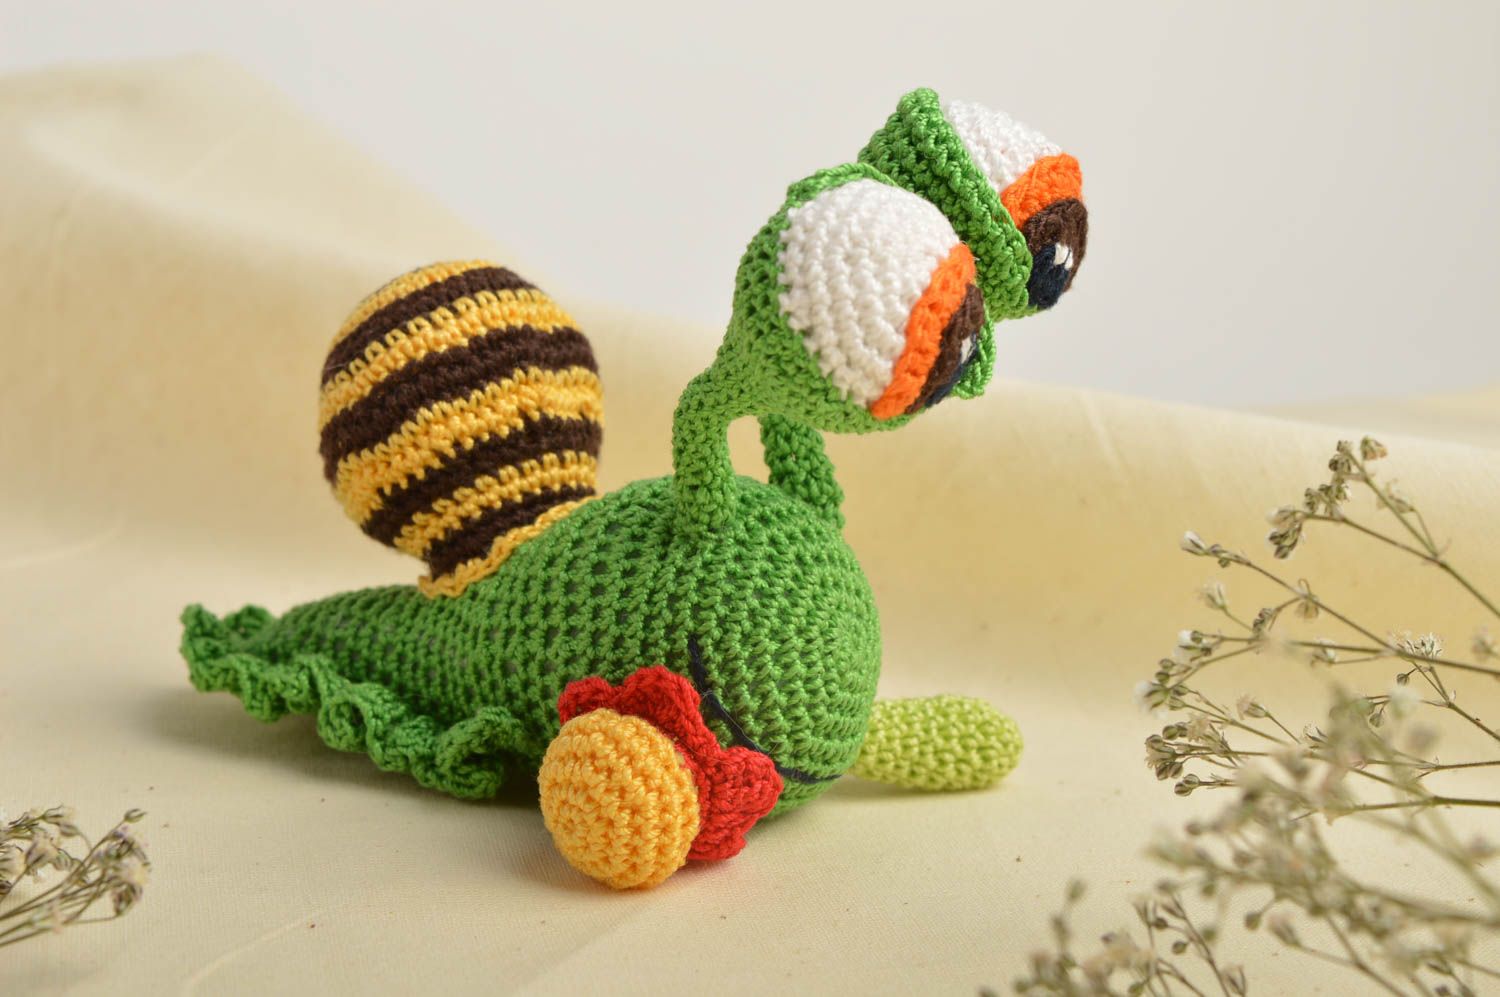 Beautiful handmade crochet toy stuffed soft toy interior decorating gift ideas photo 1